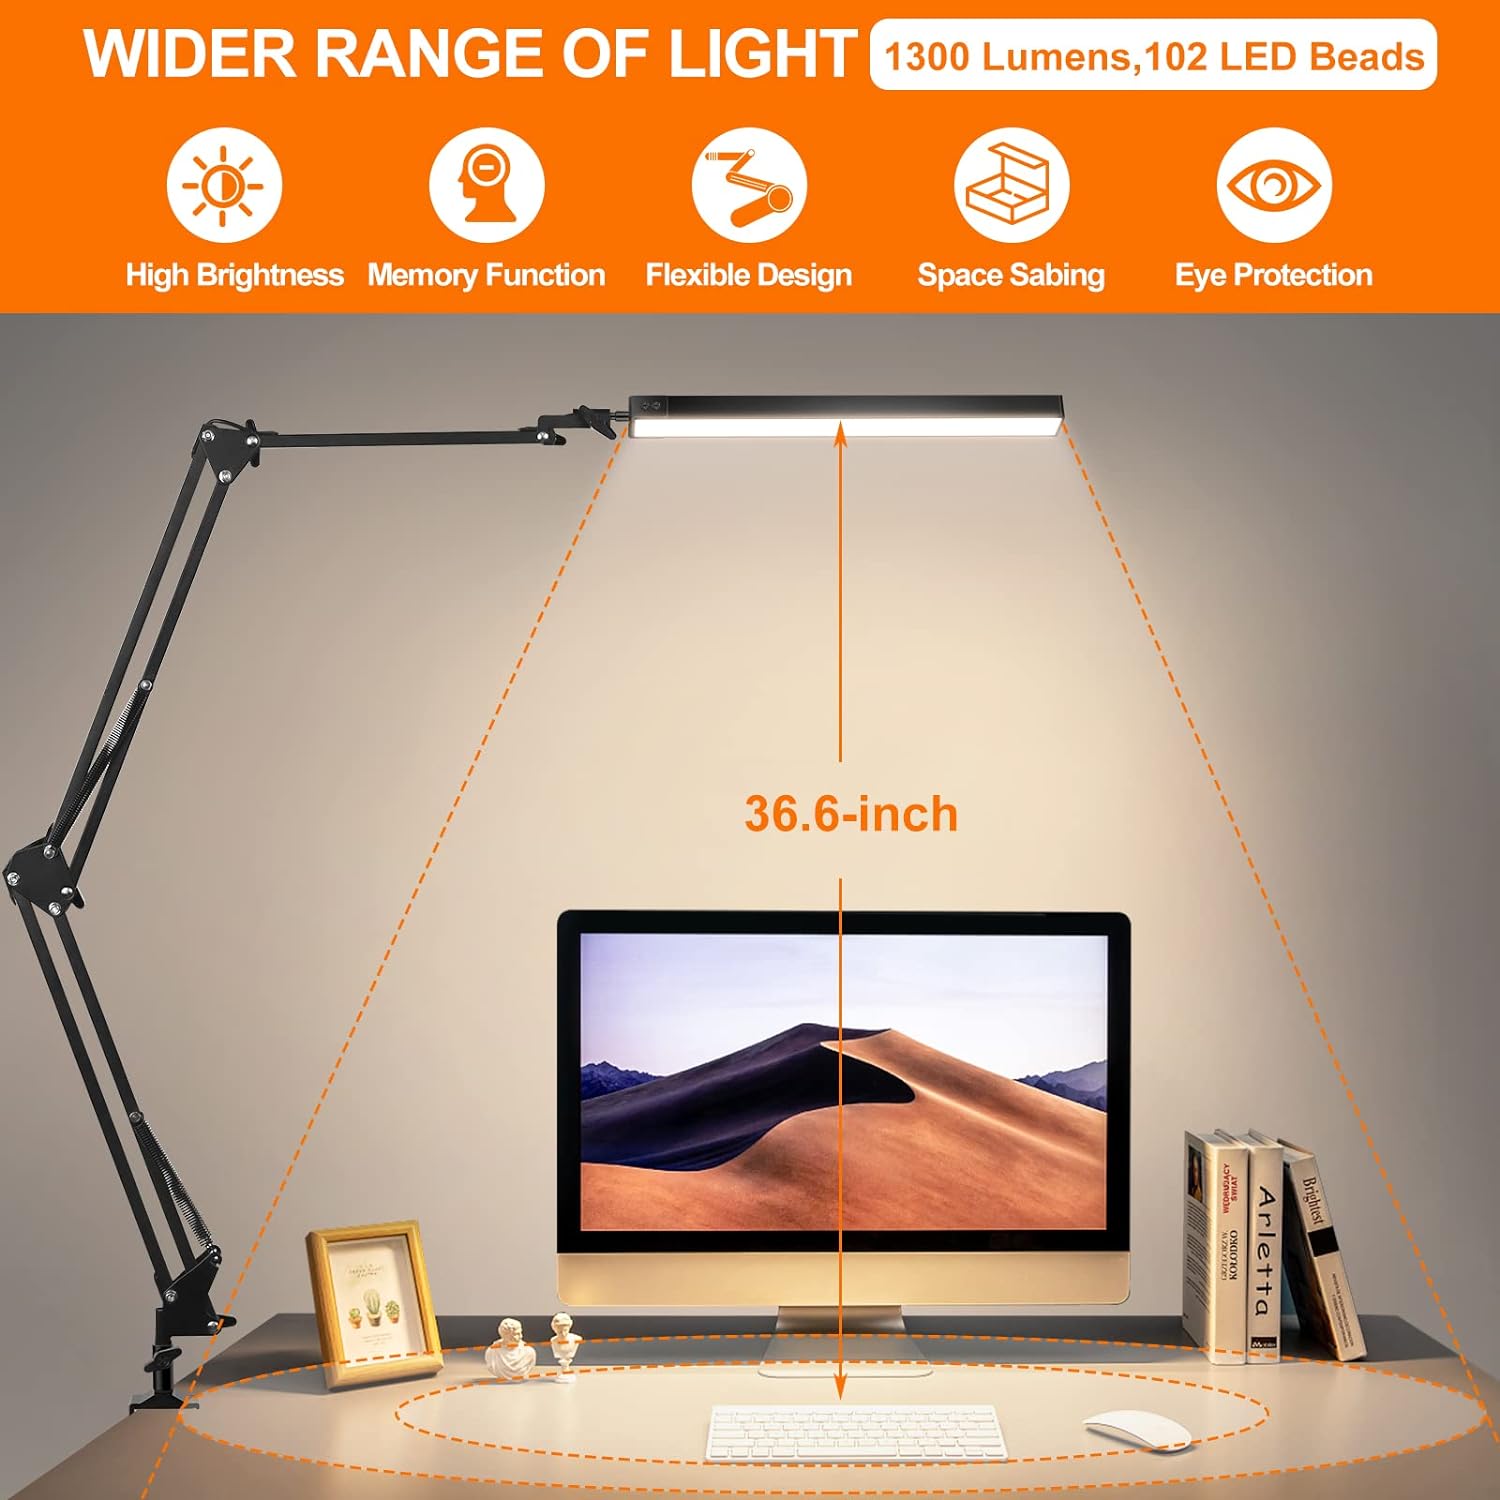 LED-Desk-Lights-Upgrade-18W-LED-Desk-Lamp-Longer-Swing-Arm-Table-Lamp-with-Clamp-Eye-Caring-Architect-Desk-Light-Dimmable-Lamp-with-3-Color-Modes-10-Brightness-Levels-10